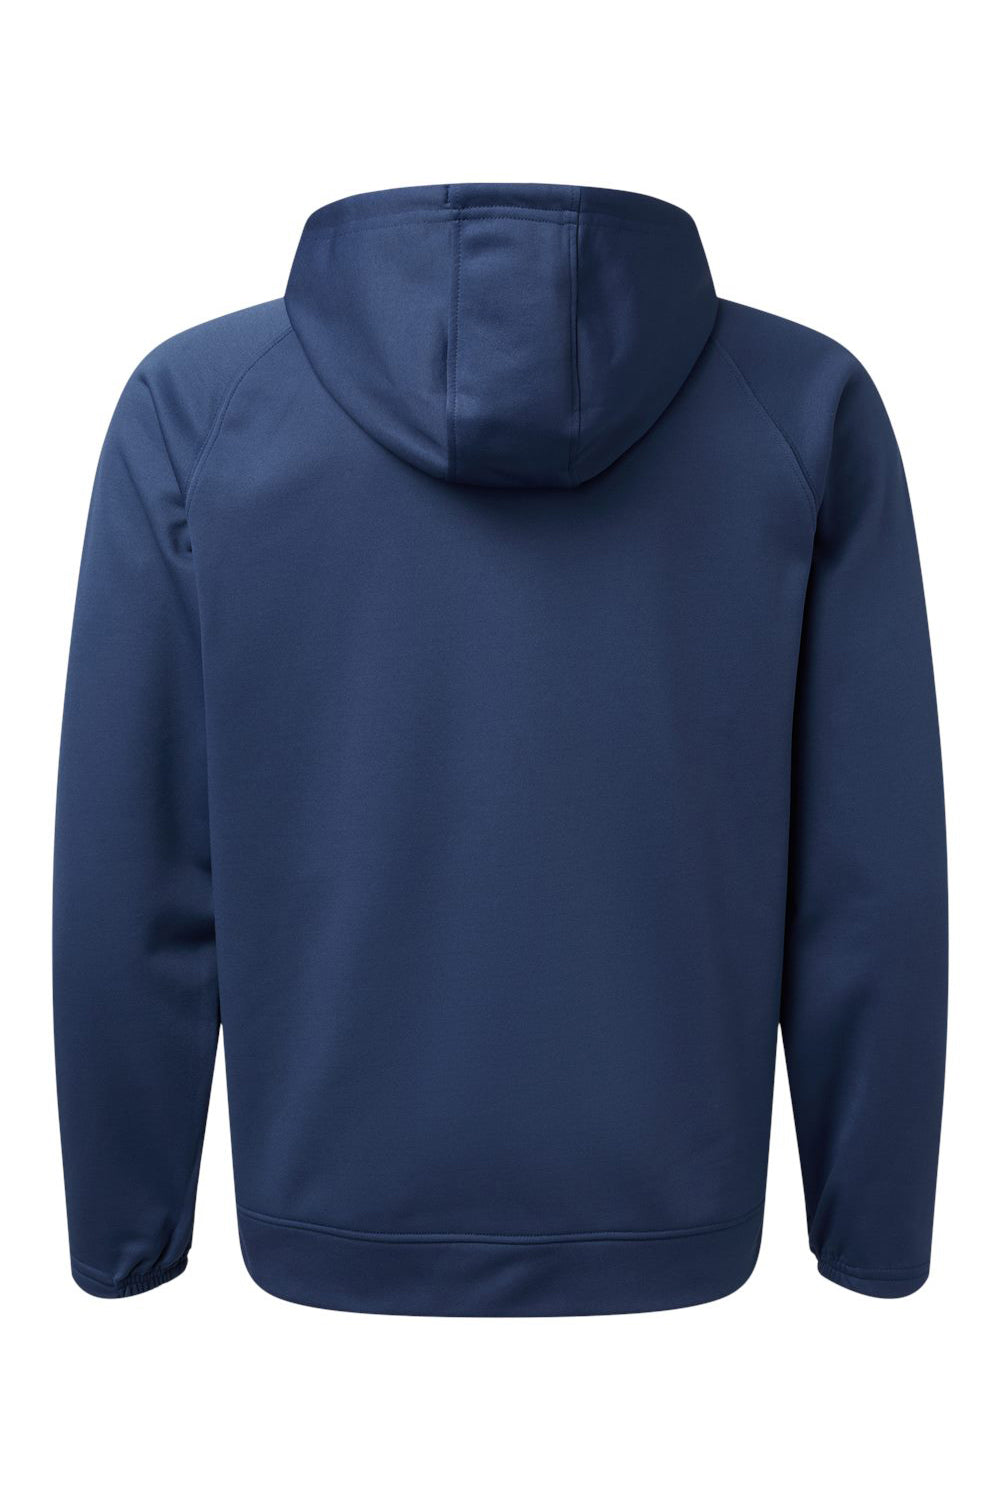 Paragon 305 Mens Vail Performance Fleece Hooded Sweatshirt Hoodie Navy Blue Flat Back